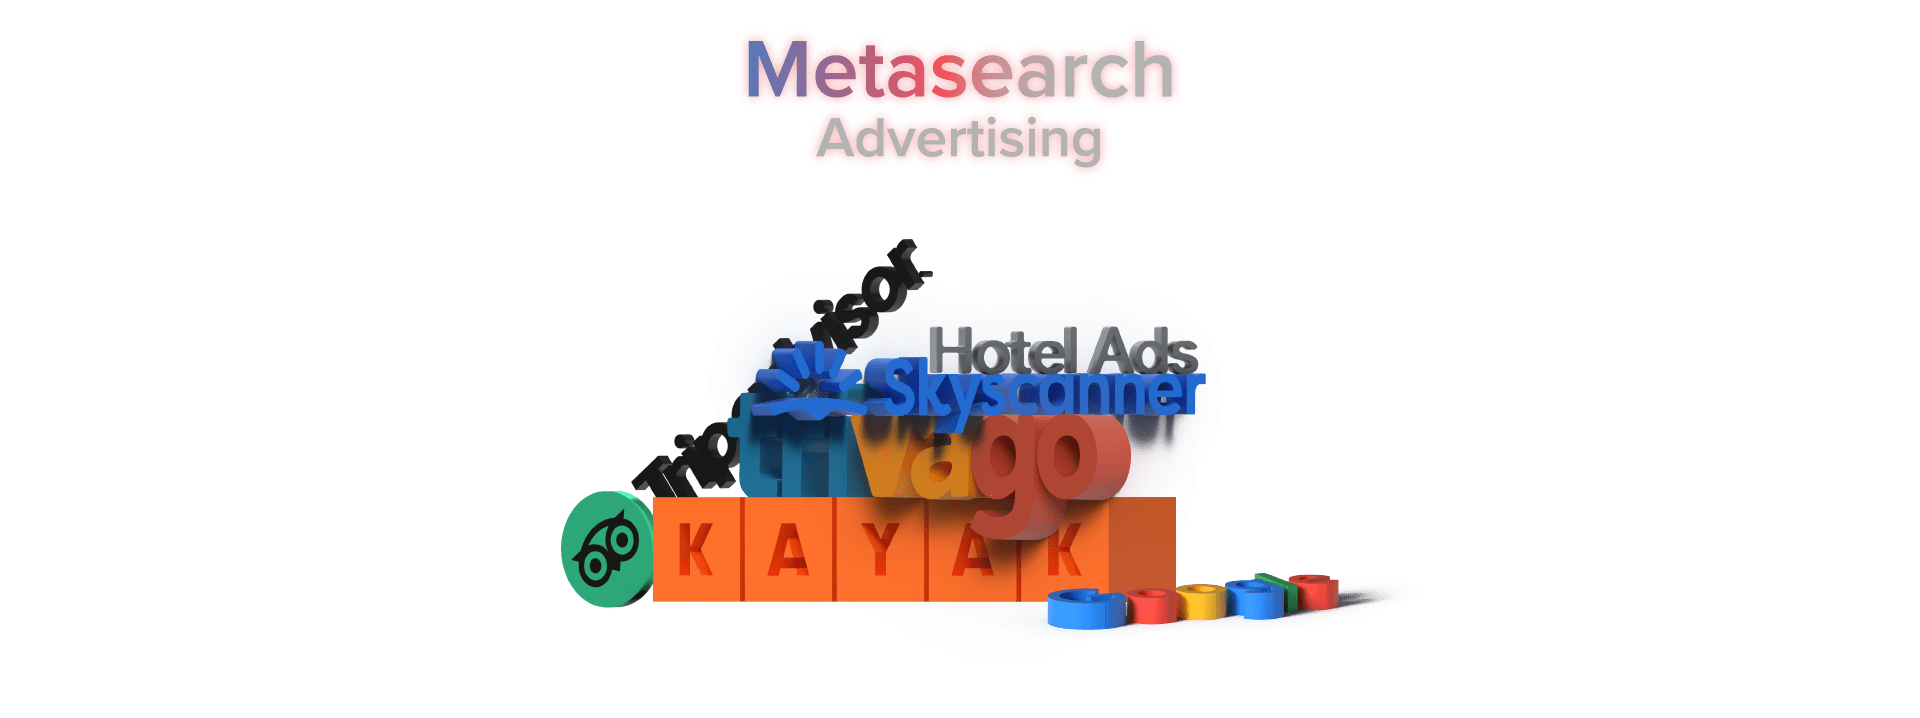 metasearch advertising clipart